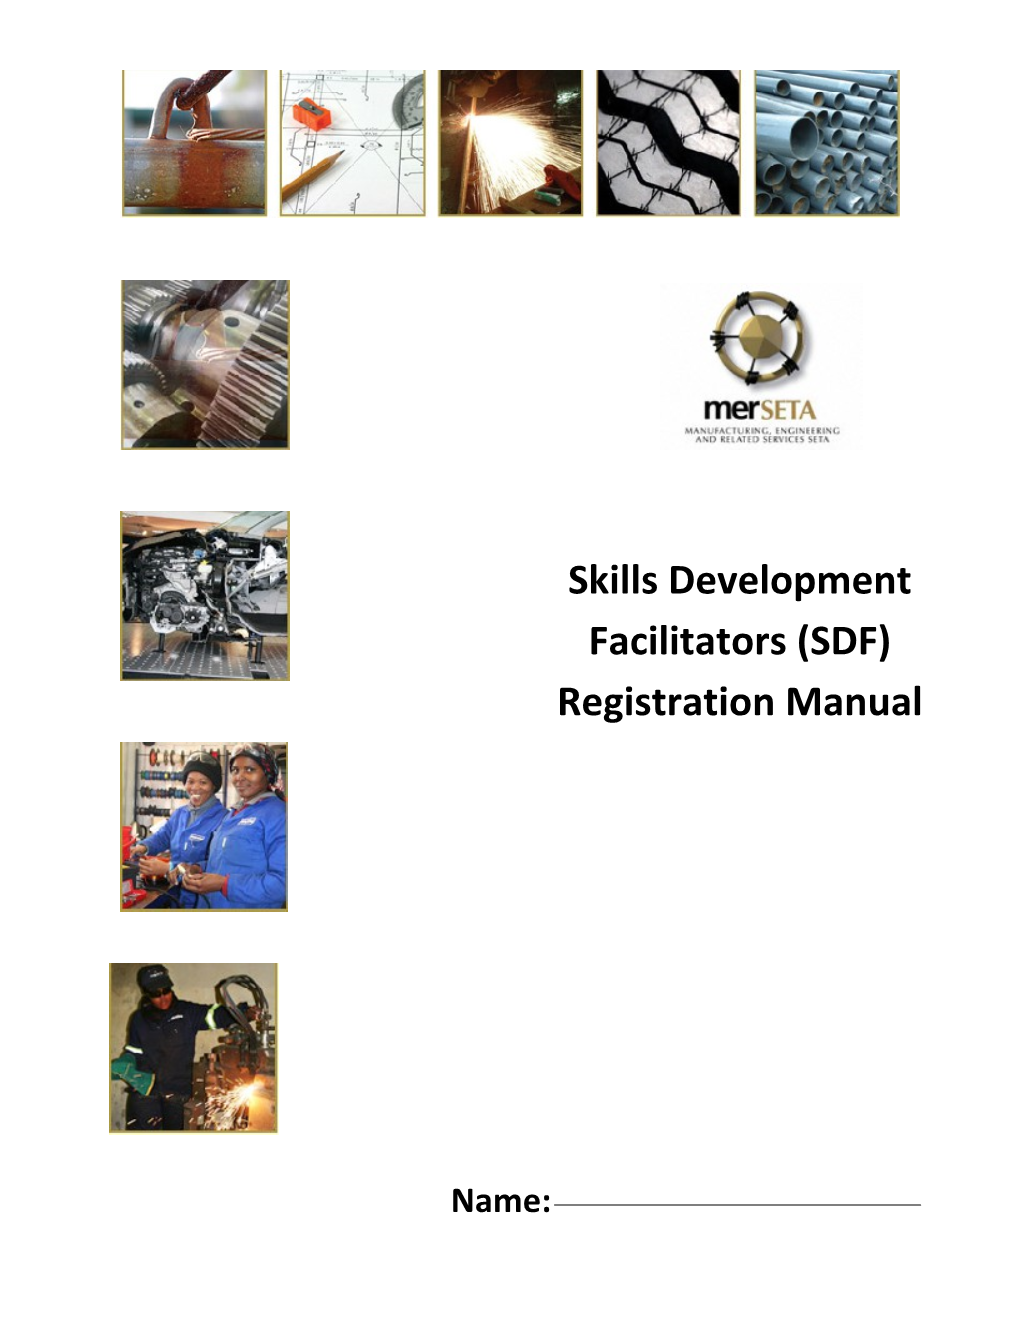 3.Register As a New Skills Development Facilitator(SDF)